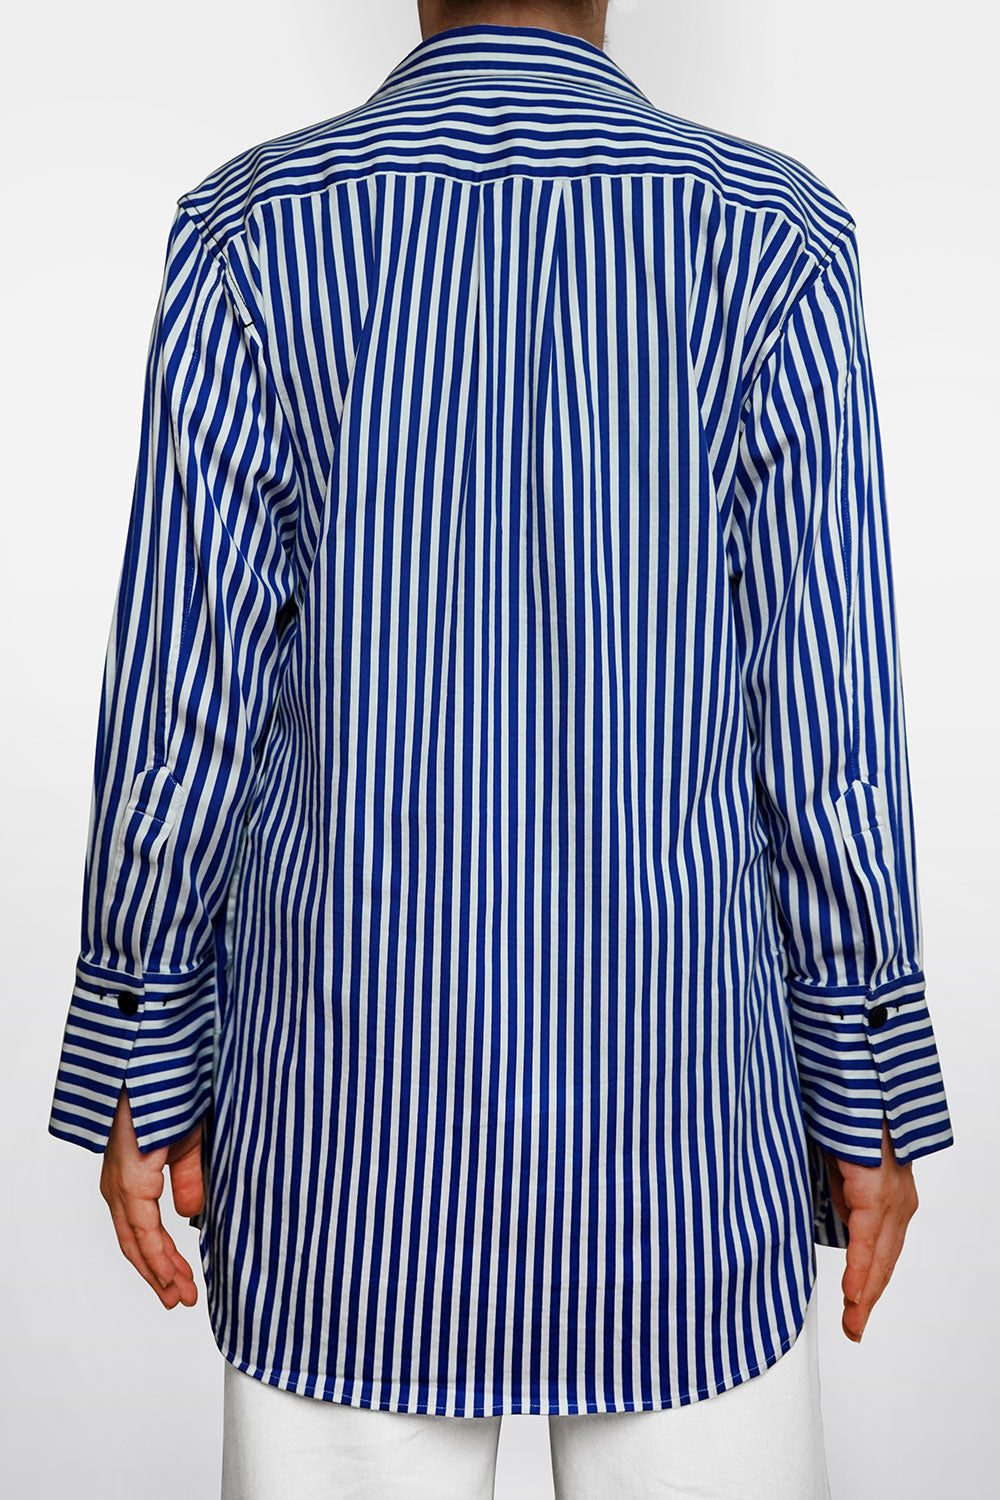 Malene Birger Pre-Owned Stripe Long Shirt Size S